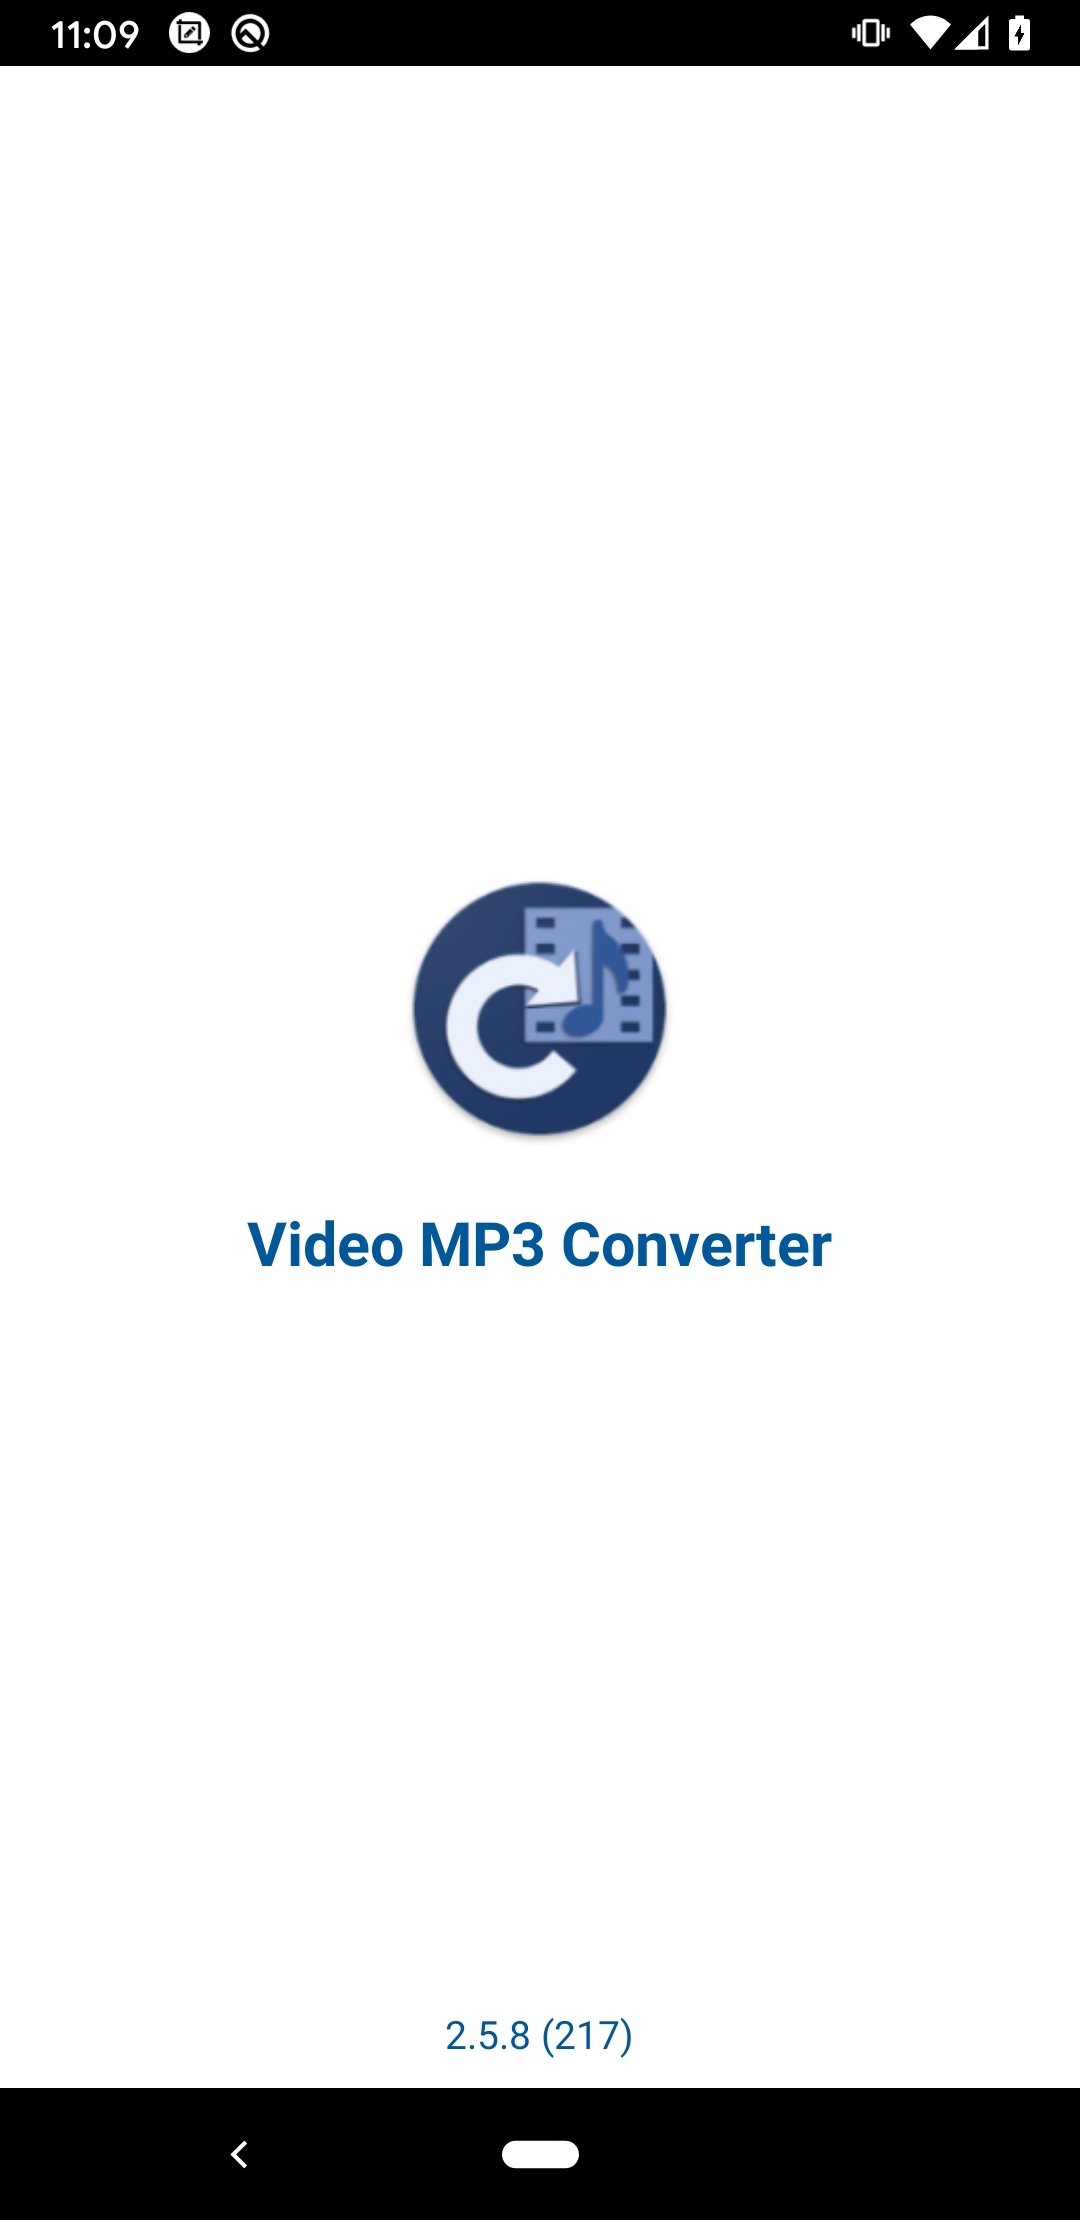 MP3 Video Converter Fundevs 2.6.4 para Android Gratis